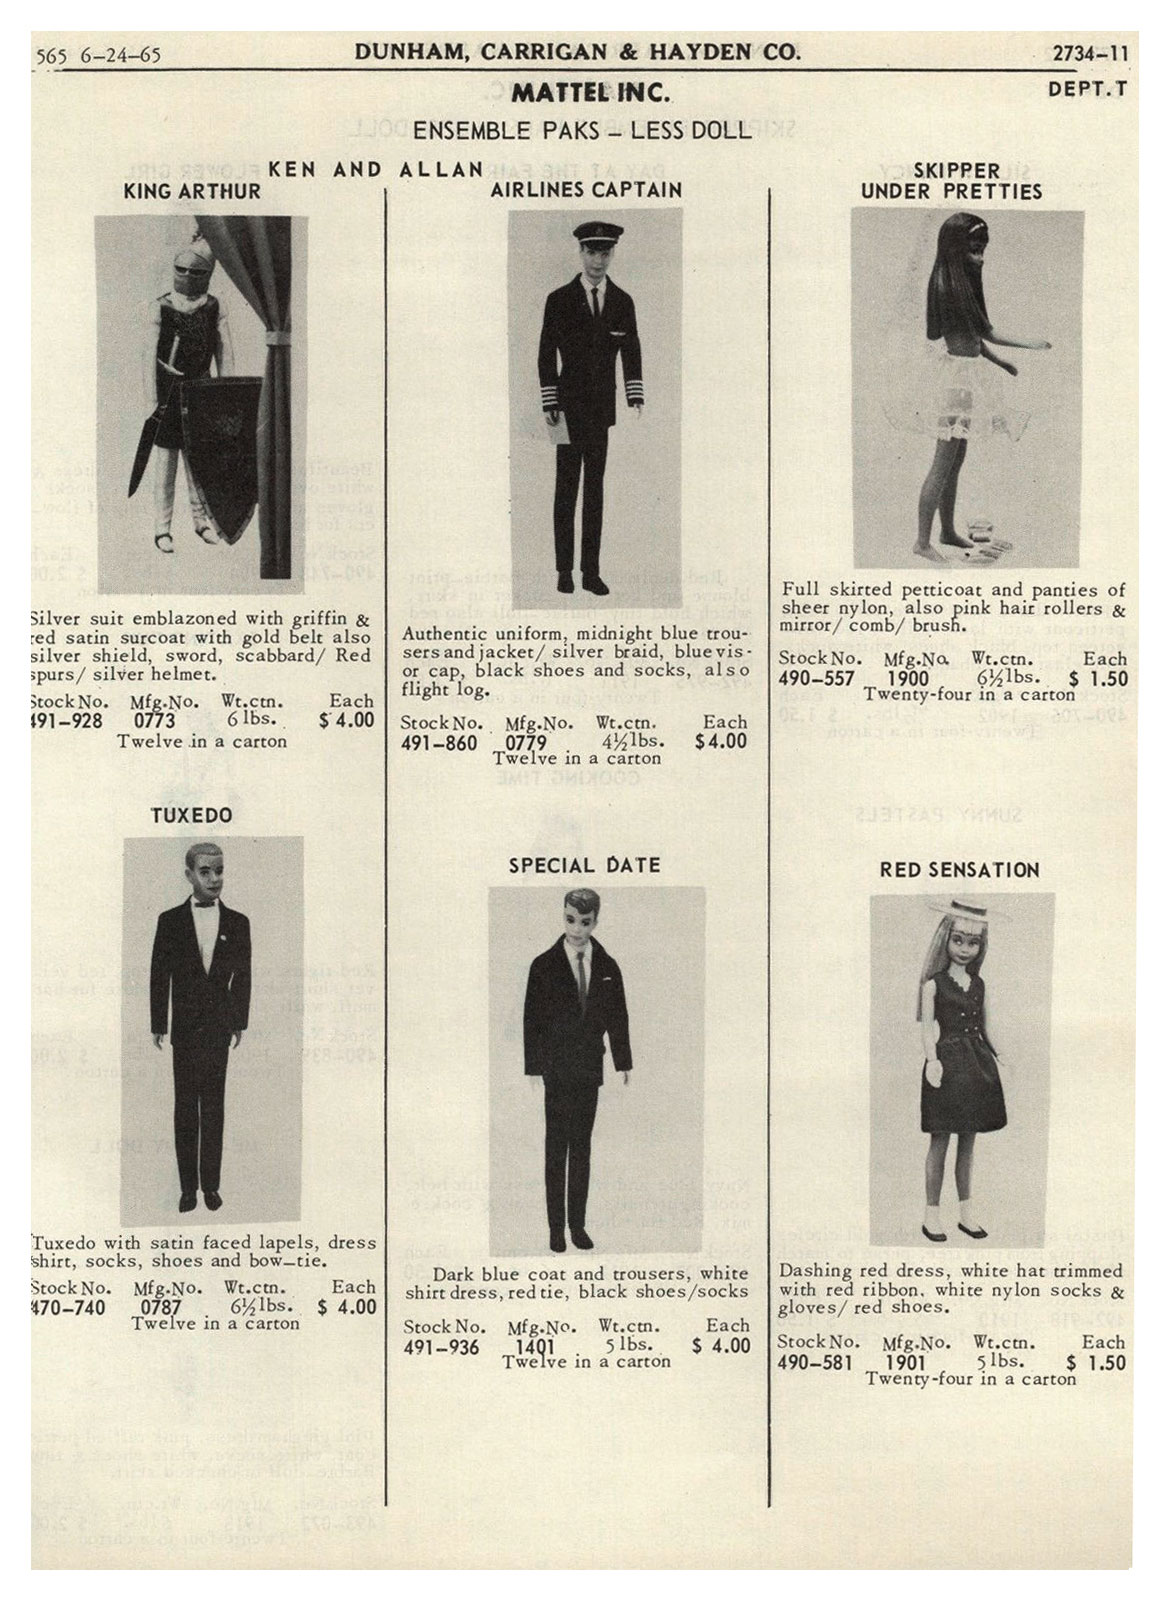 From 1965 Dunham, Carrigan, Hayden & Co. catalogue